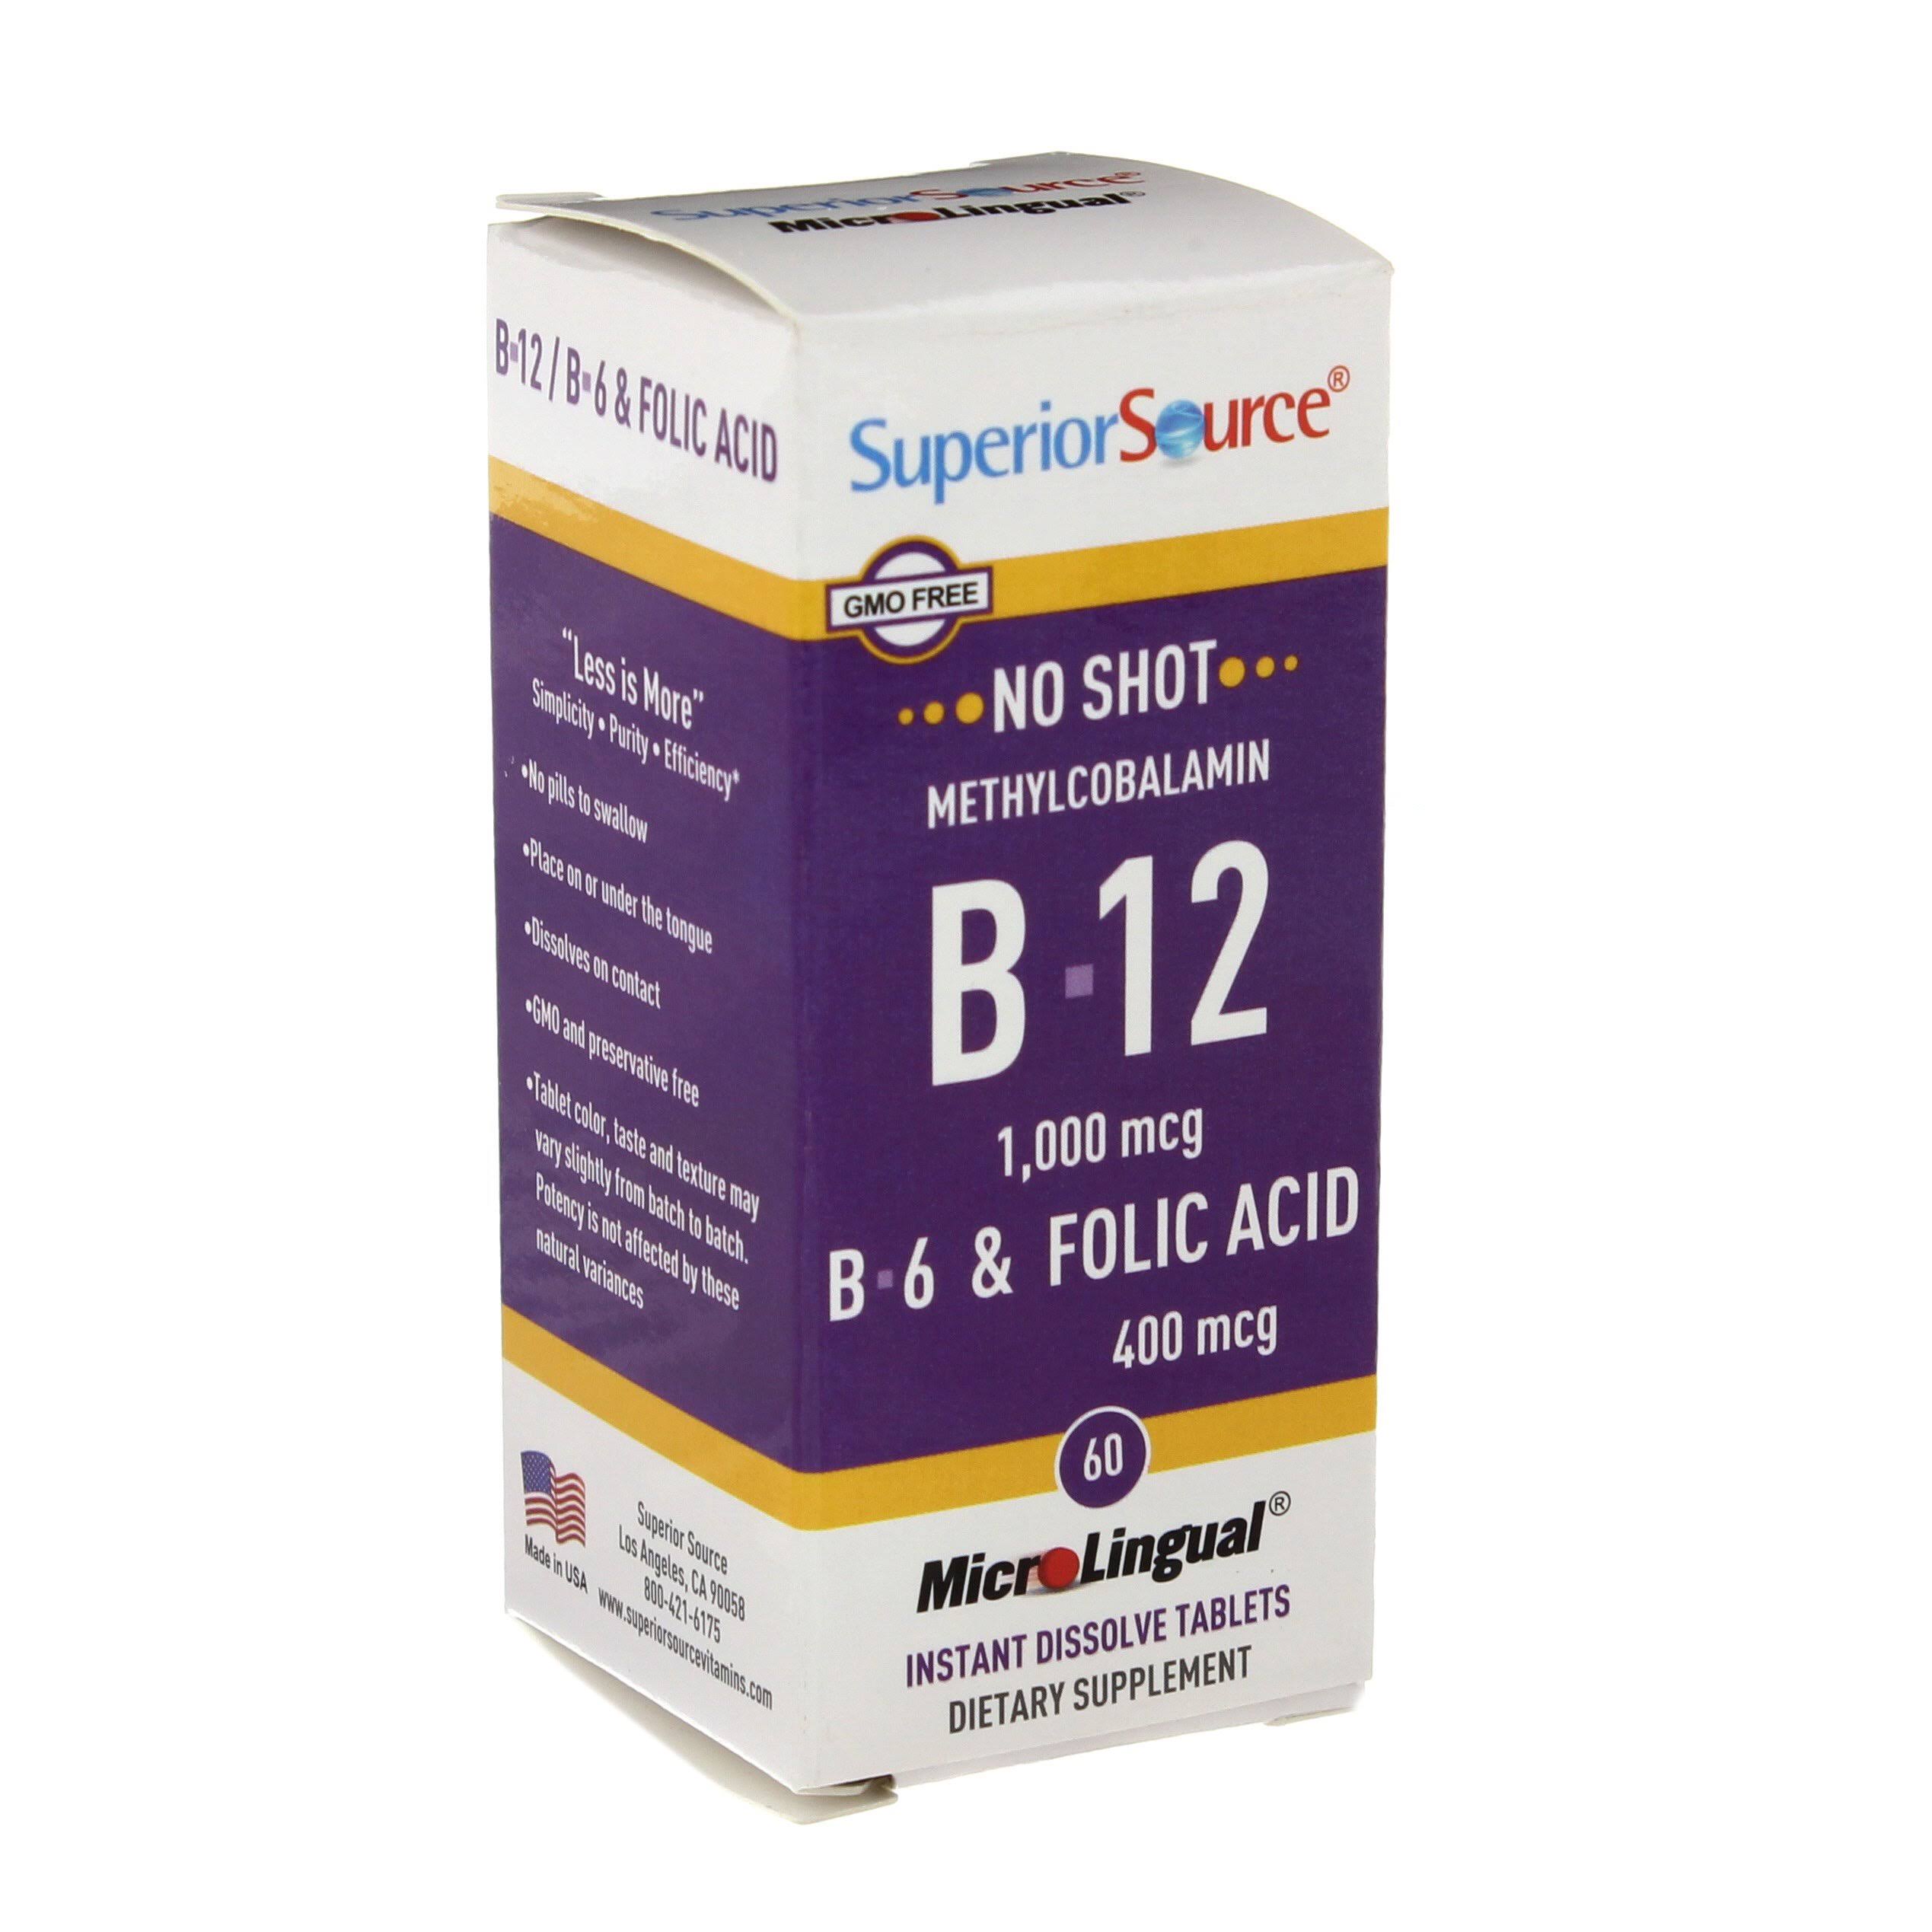 Superior Source No Shot Methylcobalamin Vitamin B12 Supplement - 60 Count